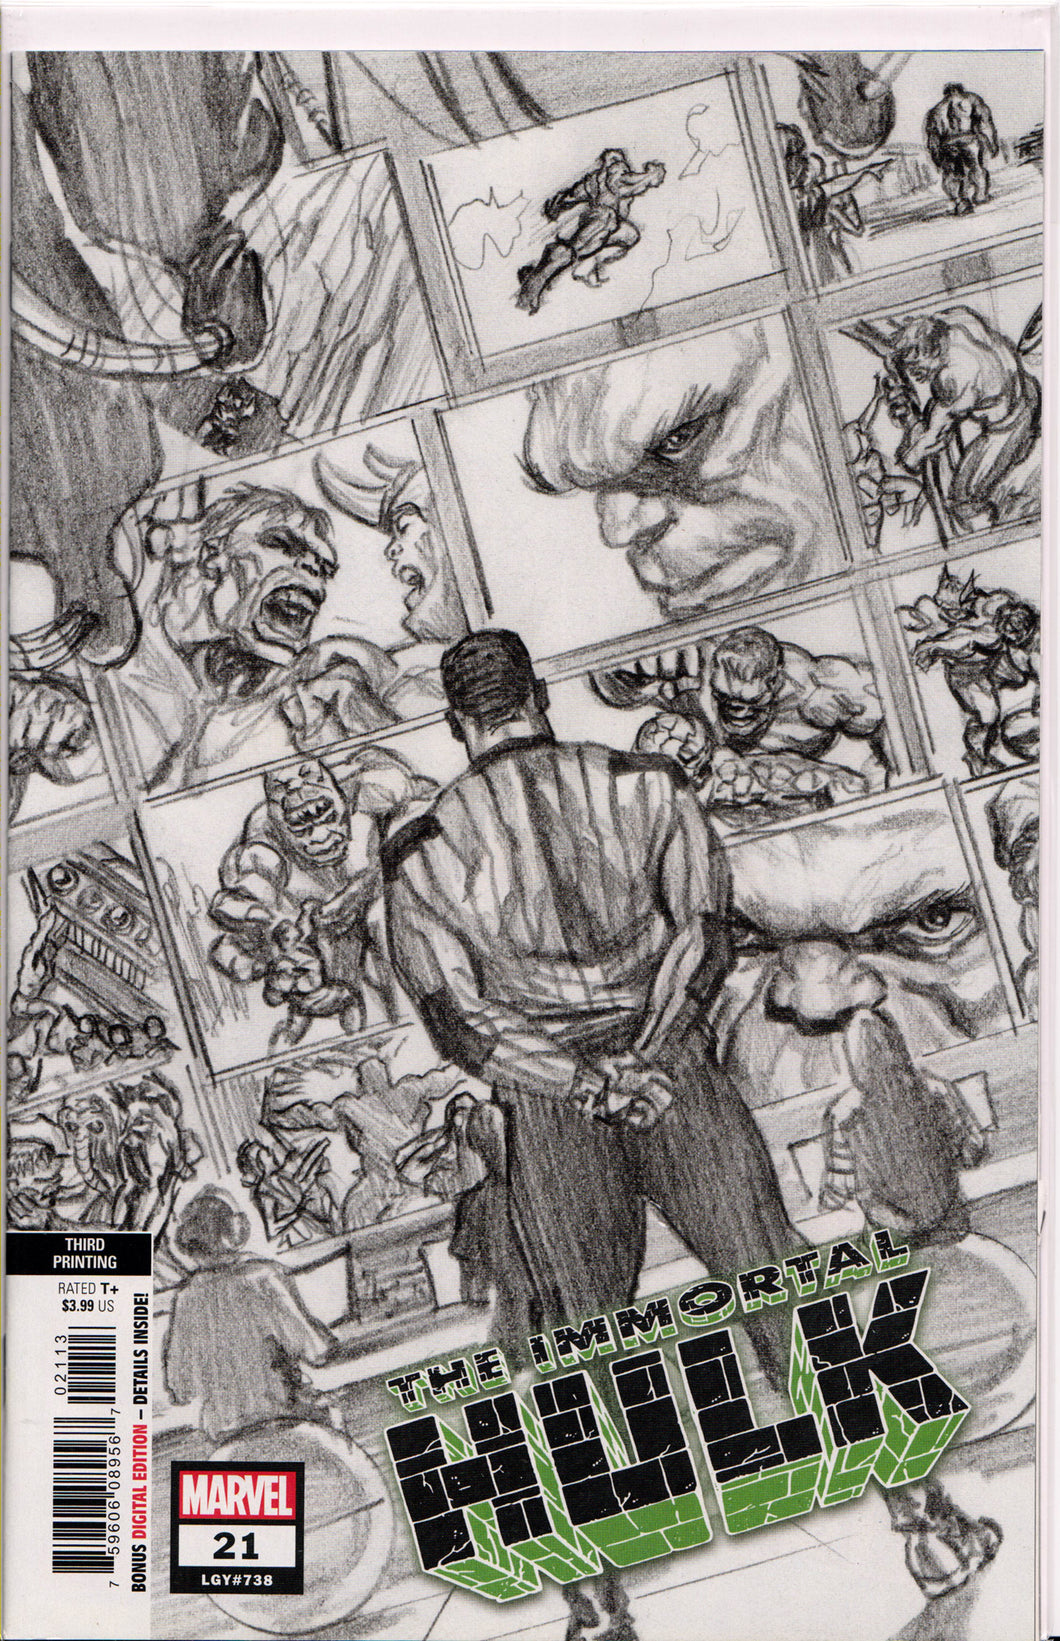 THE IMMORTAL HULK #21 (2ND PRINT VARIANT) COMIC BOOK ~ Marvel Comics